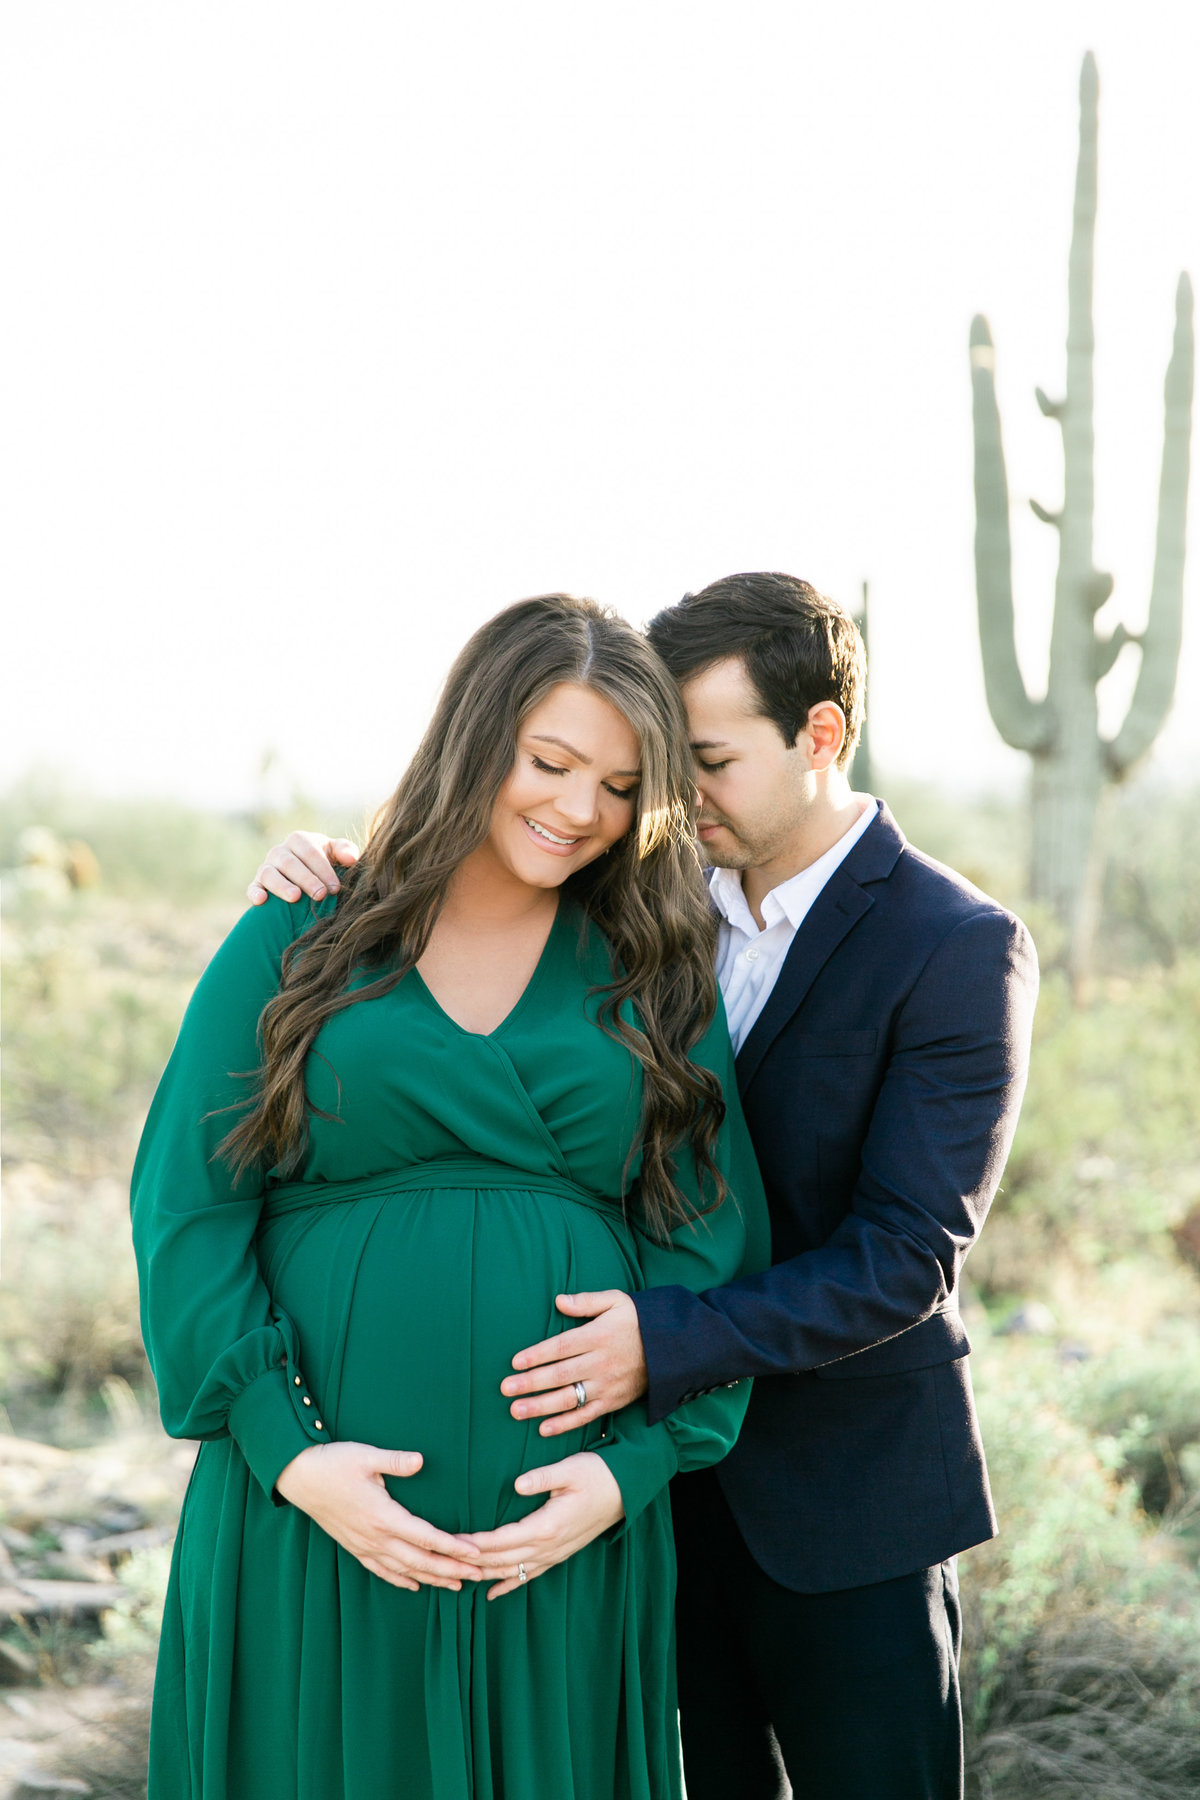 Karlie Colleen Photography - Scottsdale Arizona - Maternity Photos - Shelby & Cris-16